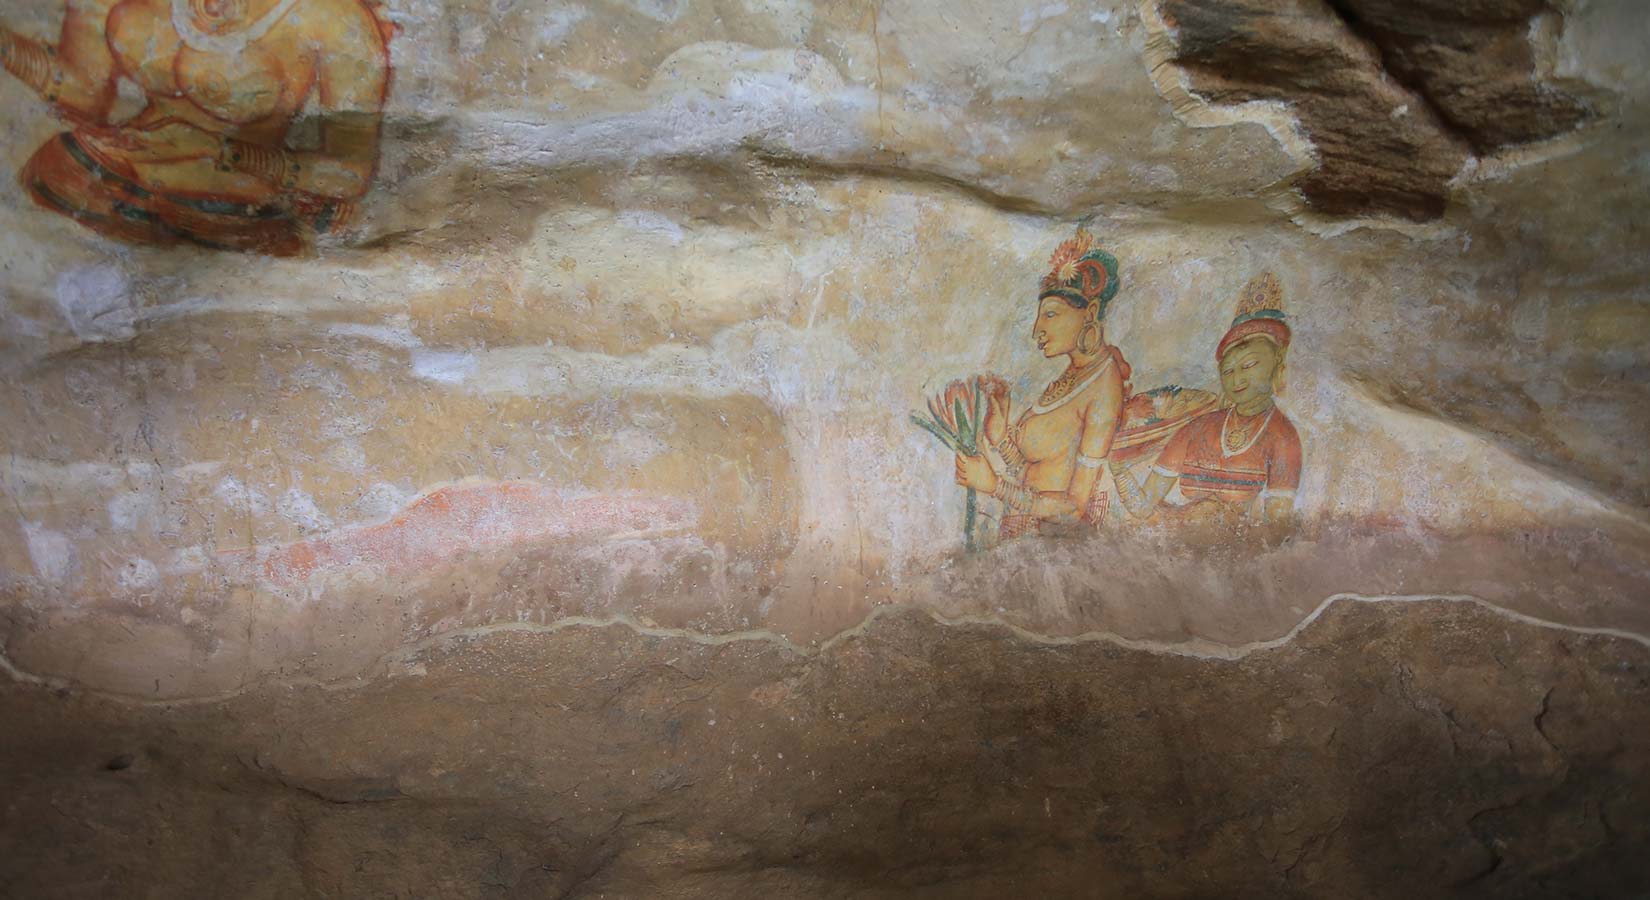 https://www.steuartholidays.com/wp-content/uploads/2019/03/Frescoes-in-Sigiriya-Rock-Fortress-1.jpg